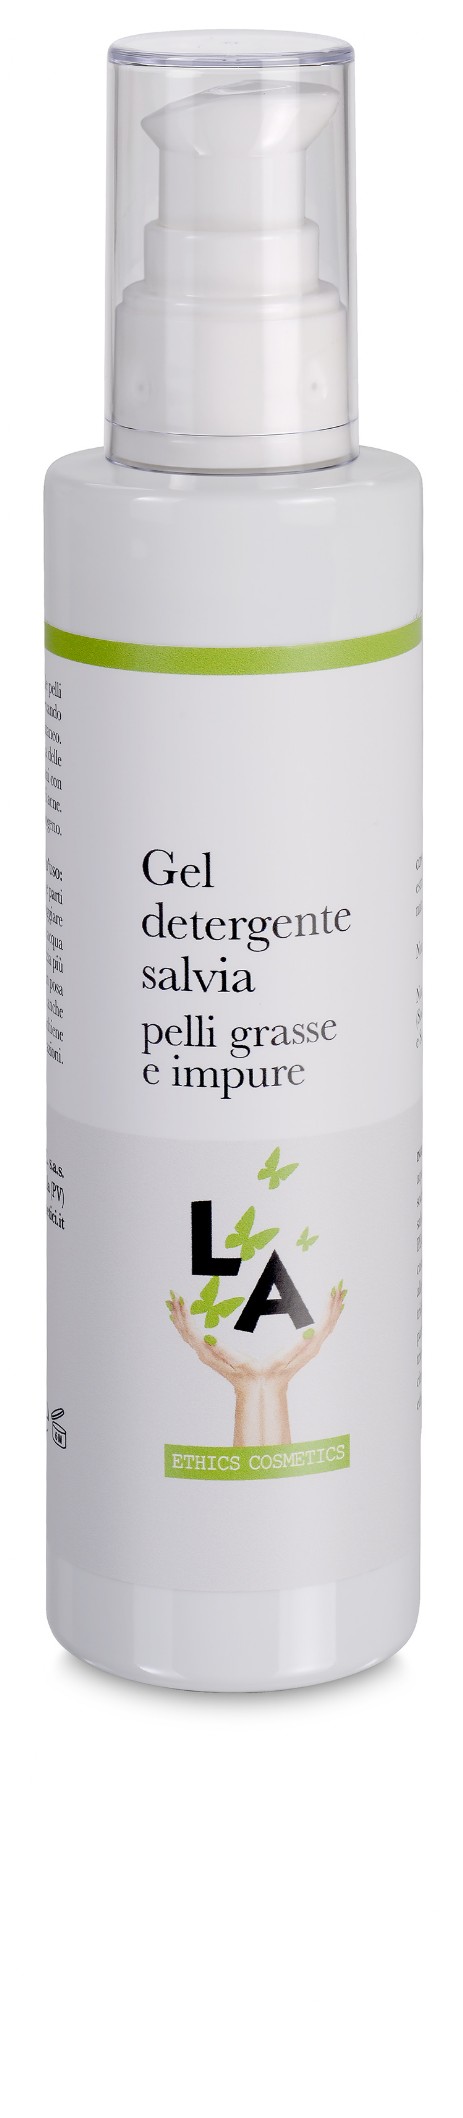 LA034  Gel detergente salvia - pelli grasse e impure